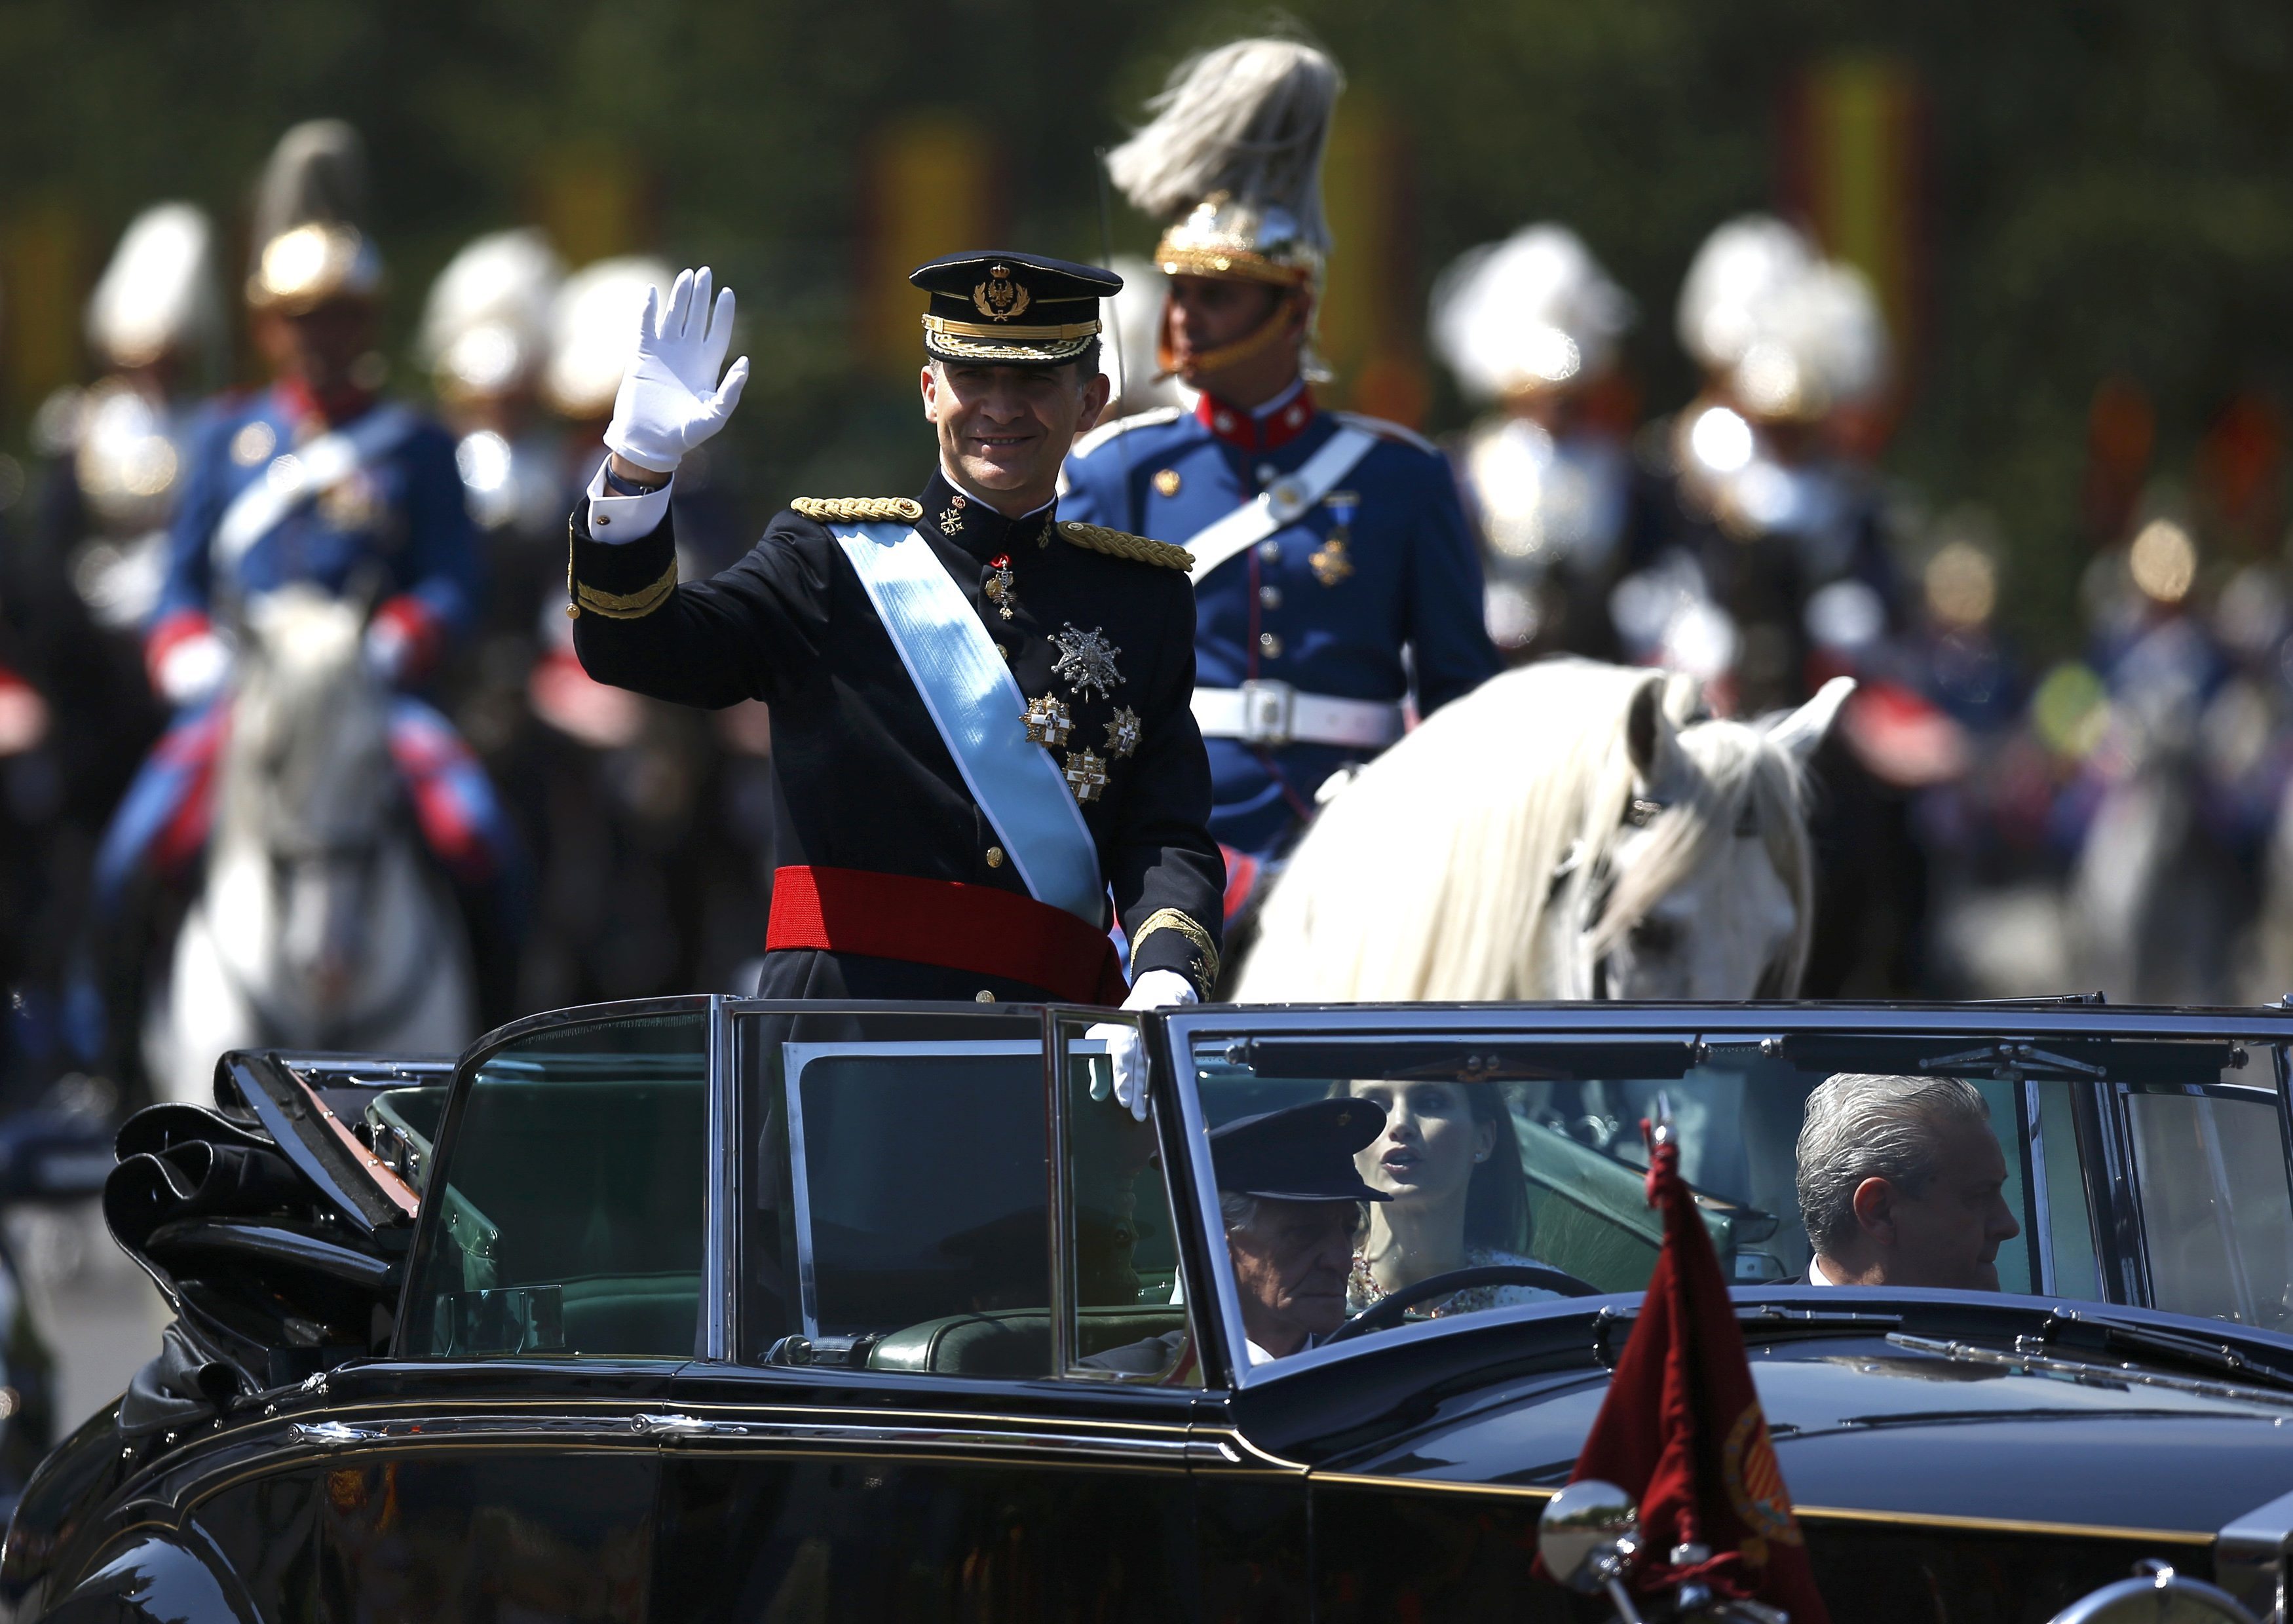 LIVE: Η ενθρόνιση του νέου βασιλιά της Ισπανίας, Φελίπε